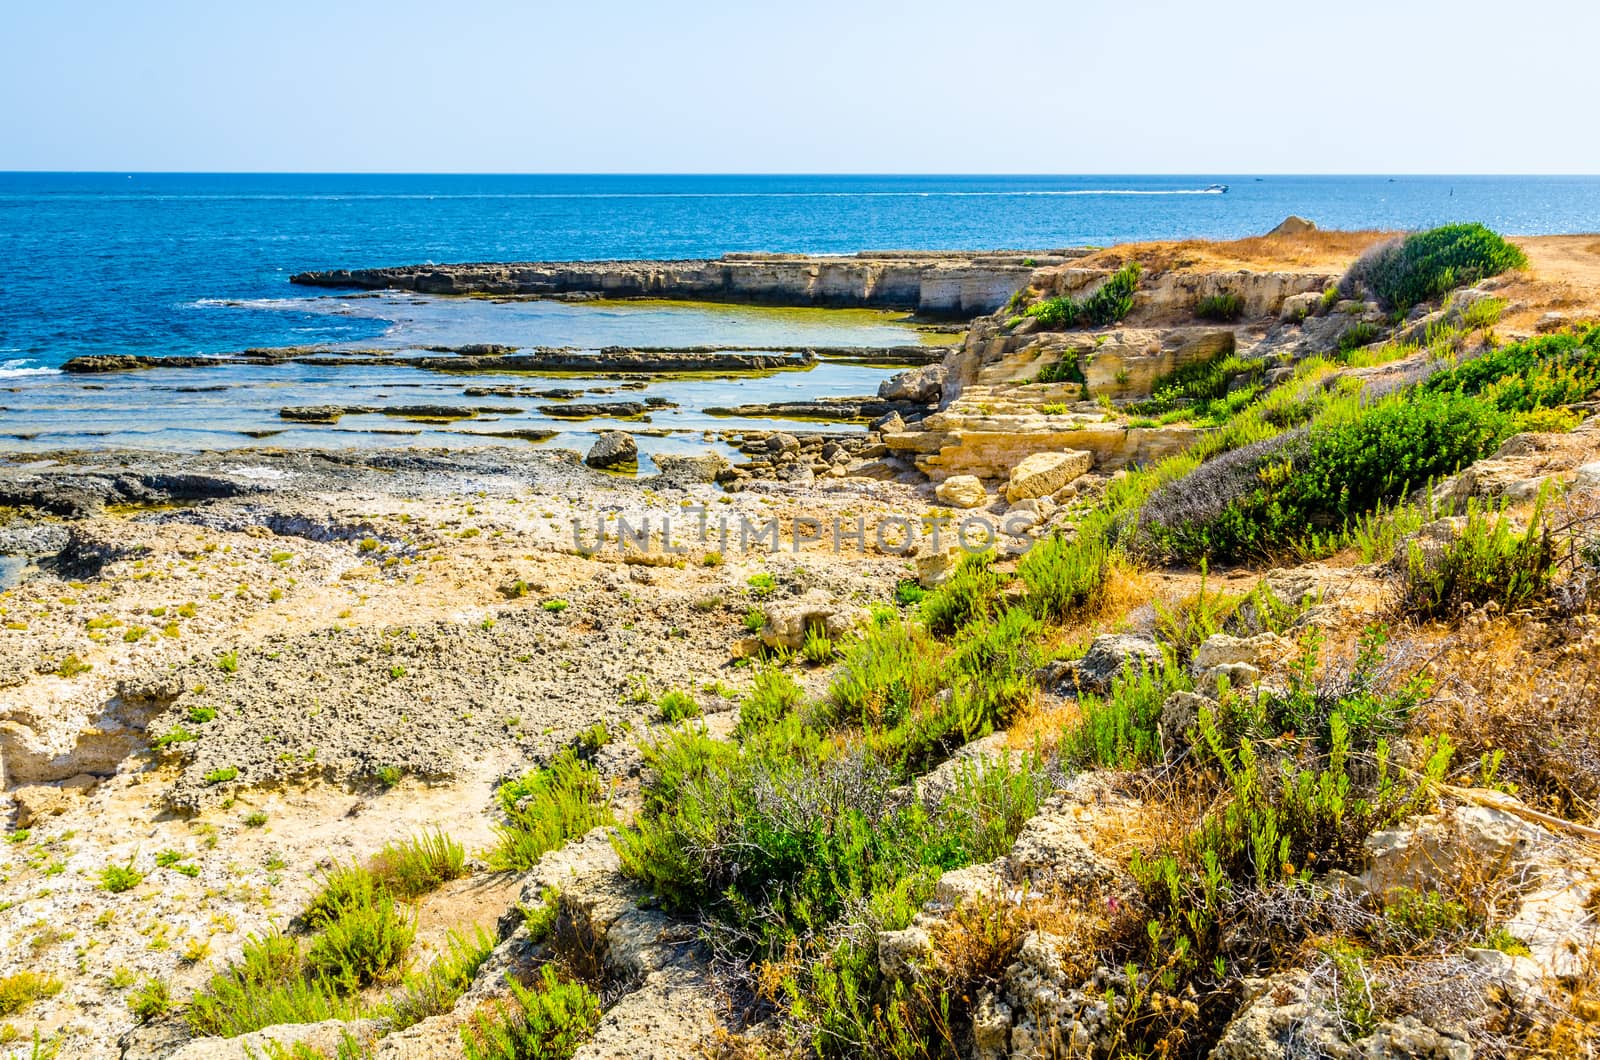 Marine Protected area of Plemmirio, Syracuse, Sicily by mauricallari